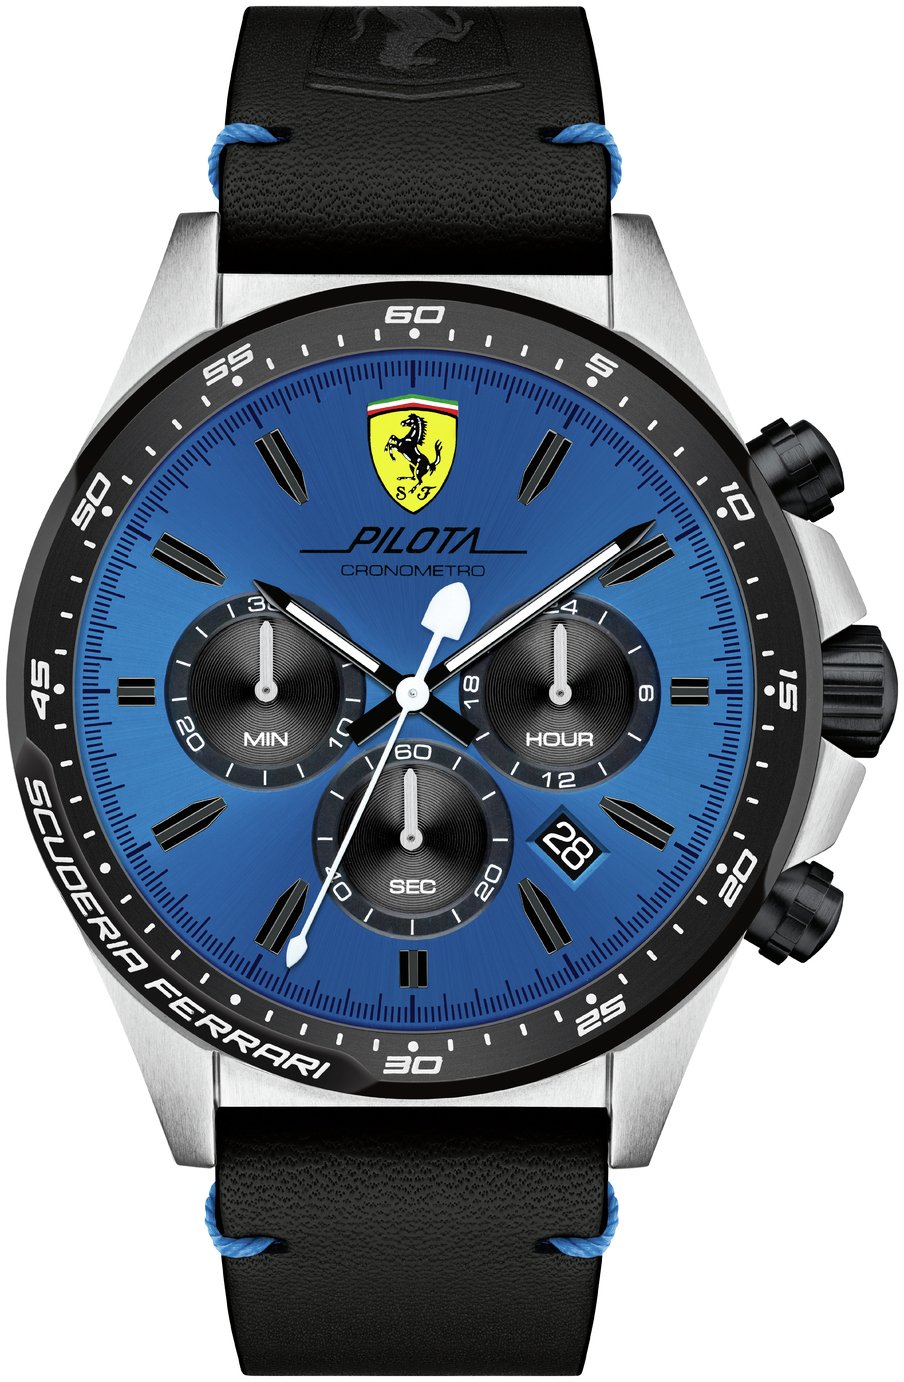 Chronos циферблаты. Часы Феррари Скудерия. Часы Ferrari pilota. Часы Феррари pilota мужские. Ferrari Scuderia ремешок.